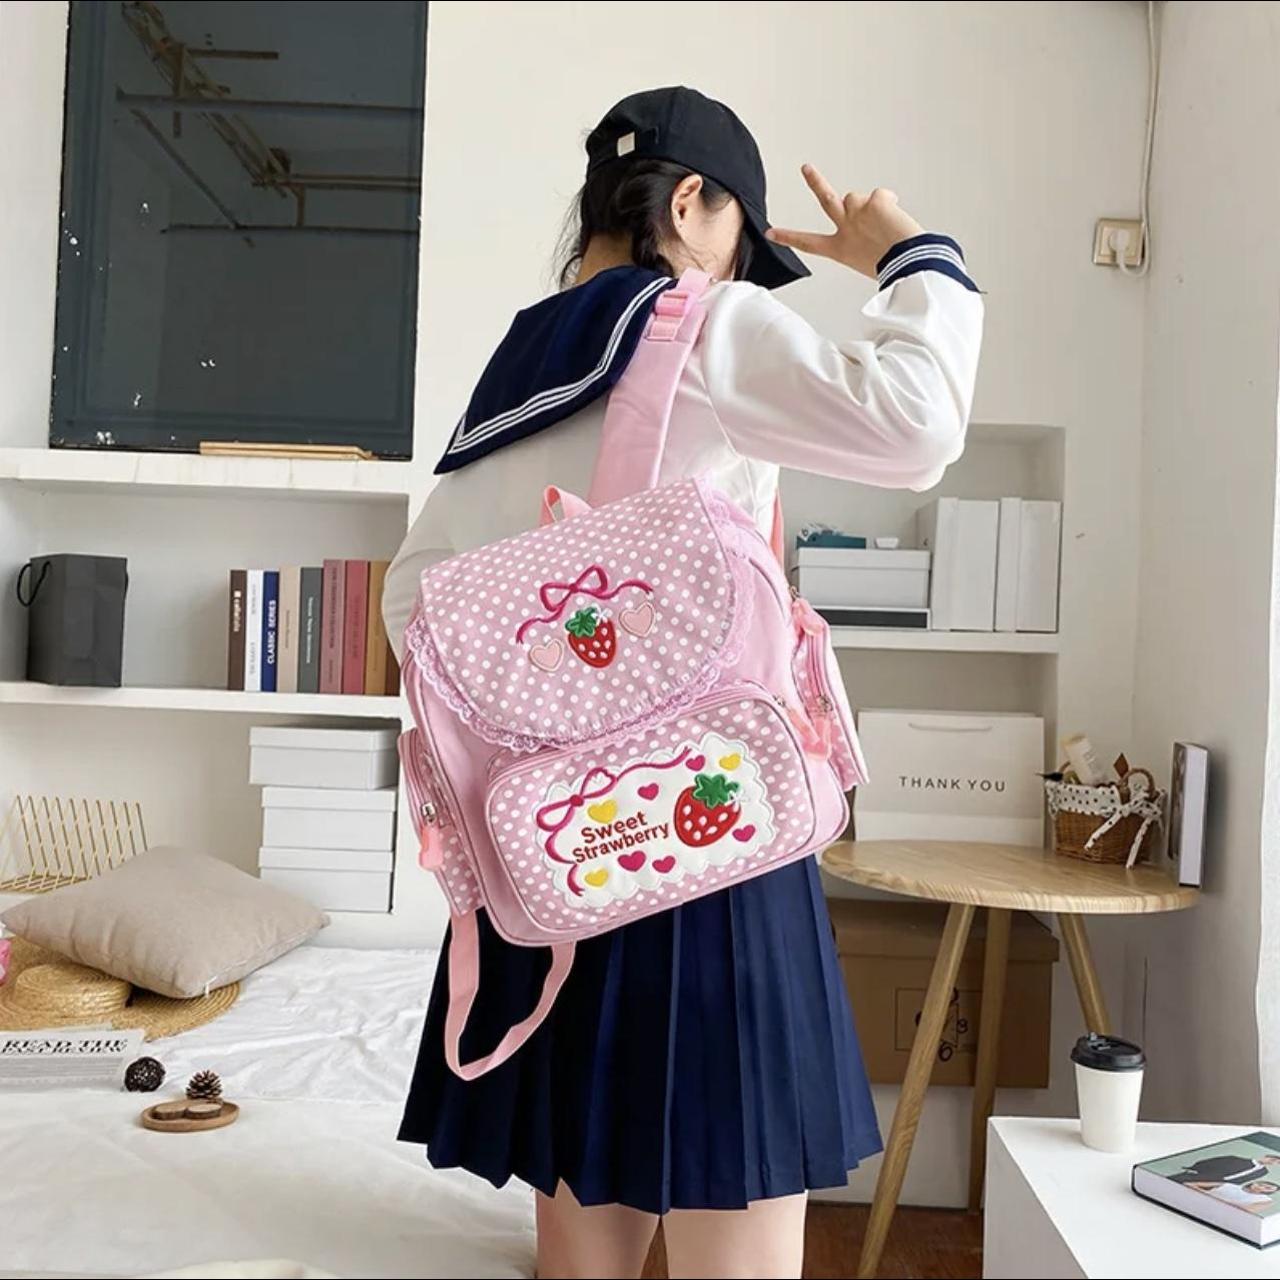 Mother garden strawberry Backpack School Girl kawaii pink used